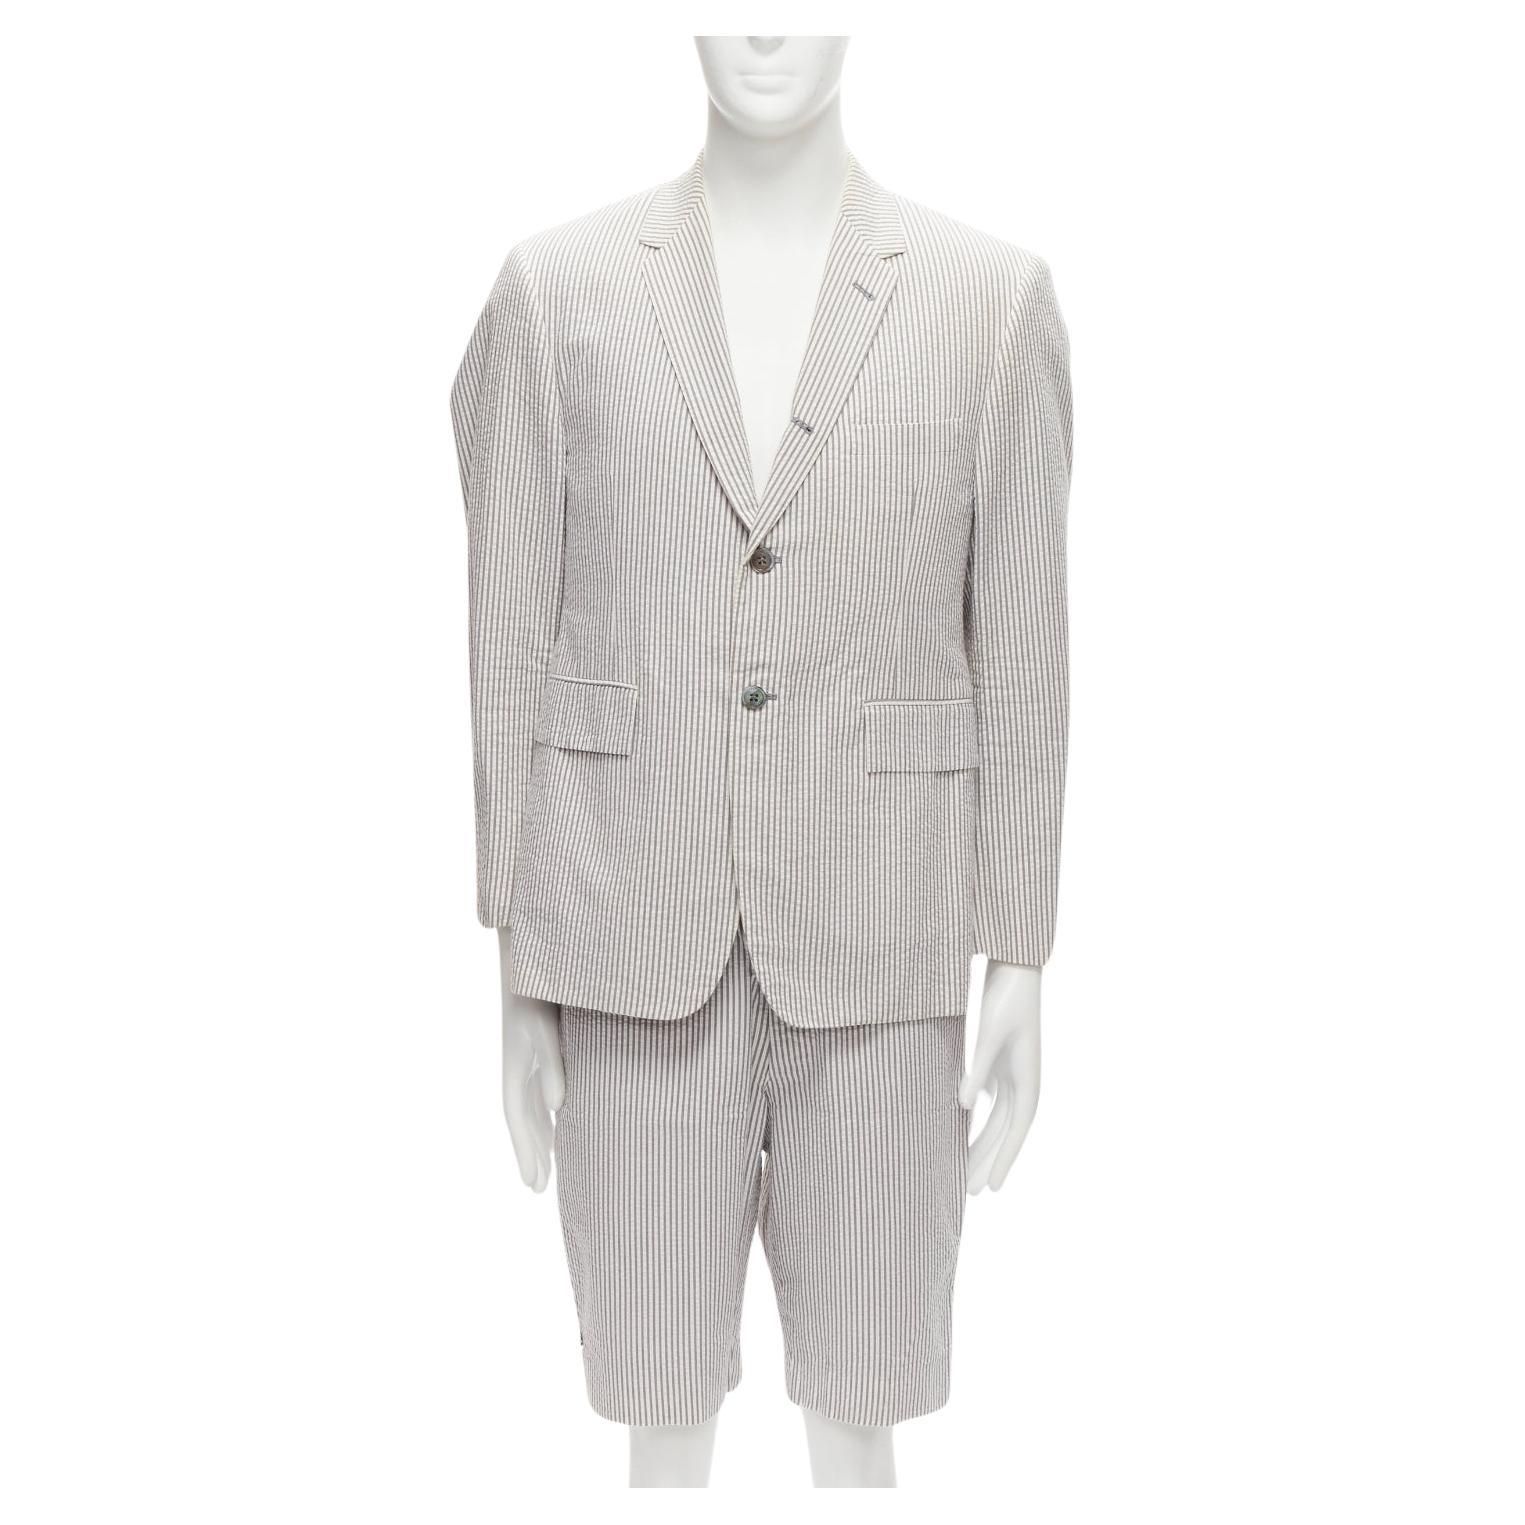 THOM BROWNE grey white striped seersucker blazer jacket shorts suit Sz. 3 L For Sale